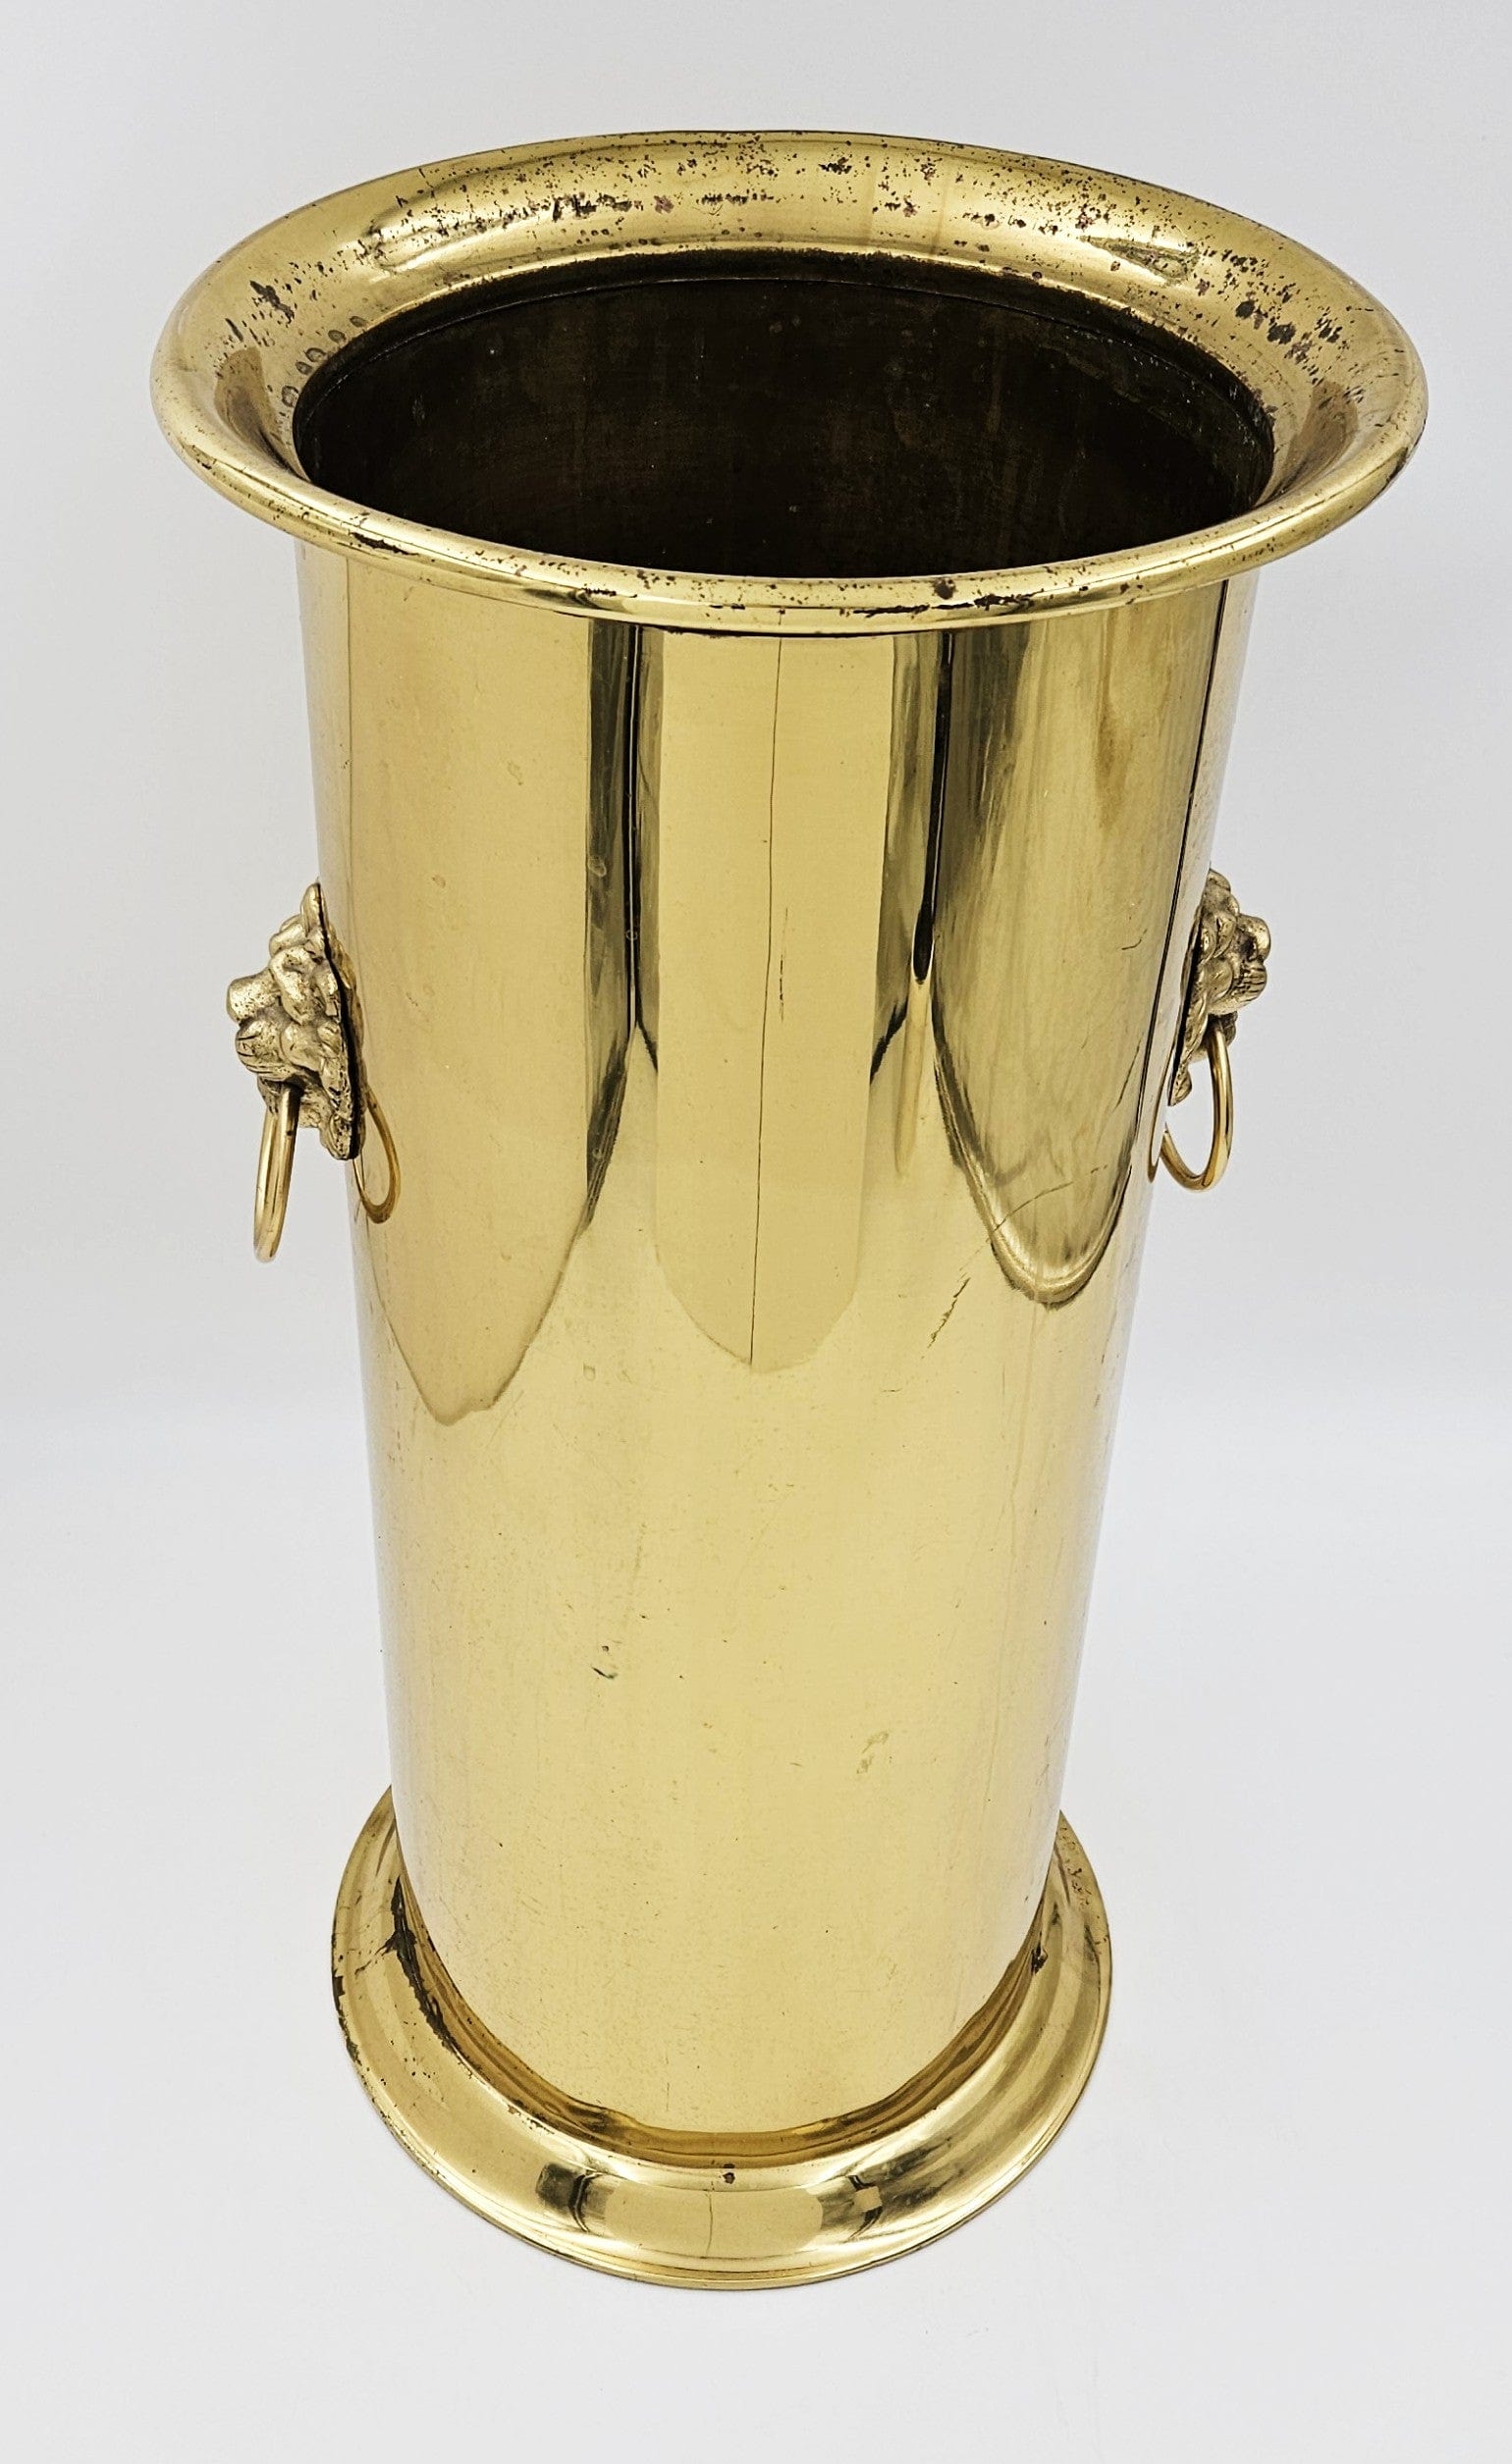 Antique Brass Umbrella Stand Home Decor Vintage Brass Lion Head Handles Tall Umbrella Stand or Planter Pot